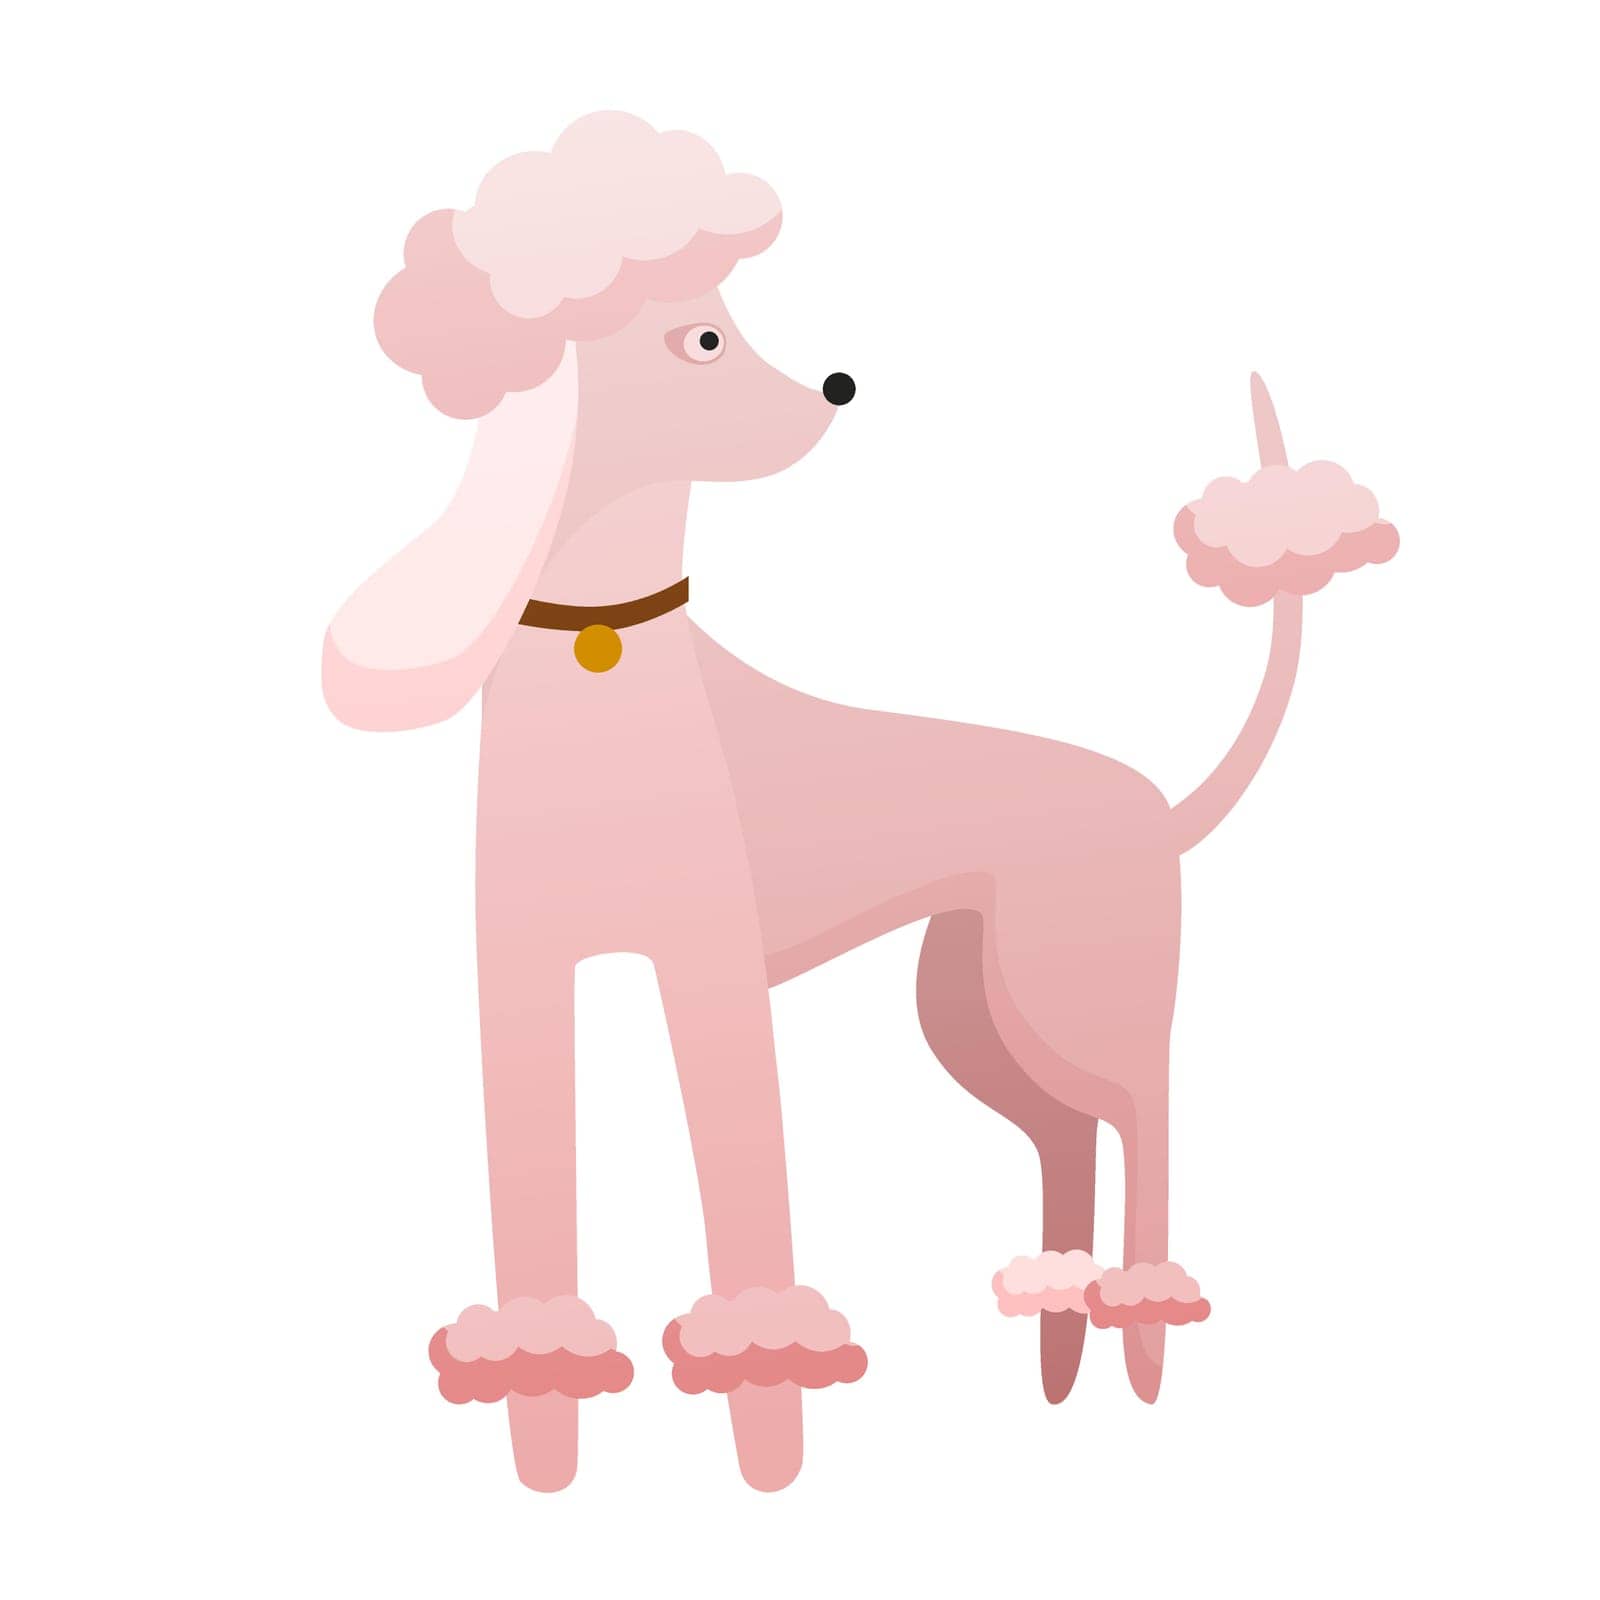 Stylish poodle dog. Domestic loyal pet, family puppy friend vector cartoon illustration